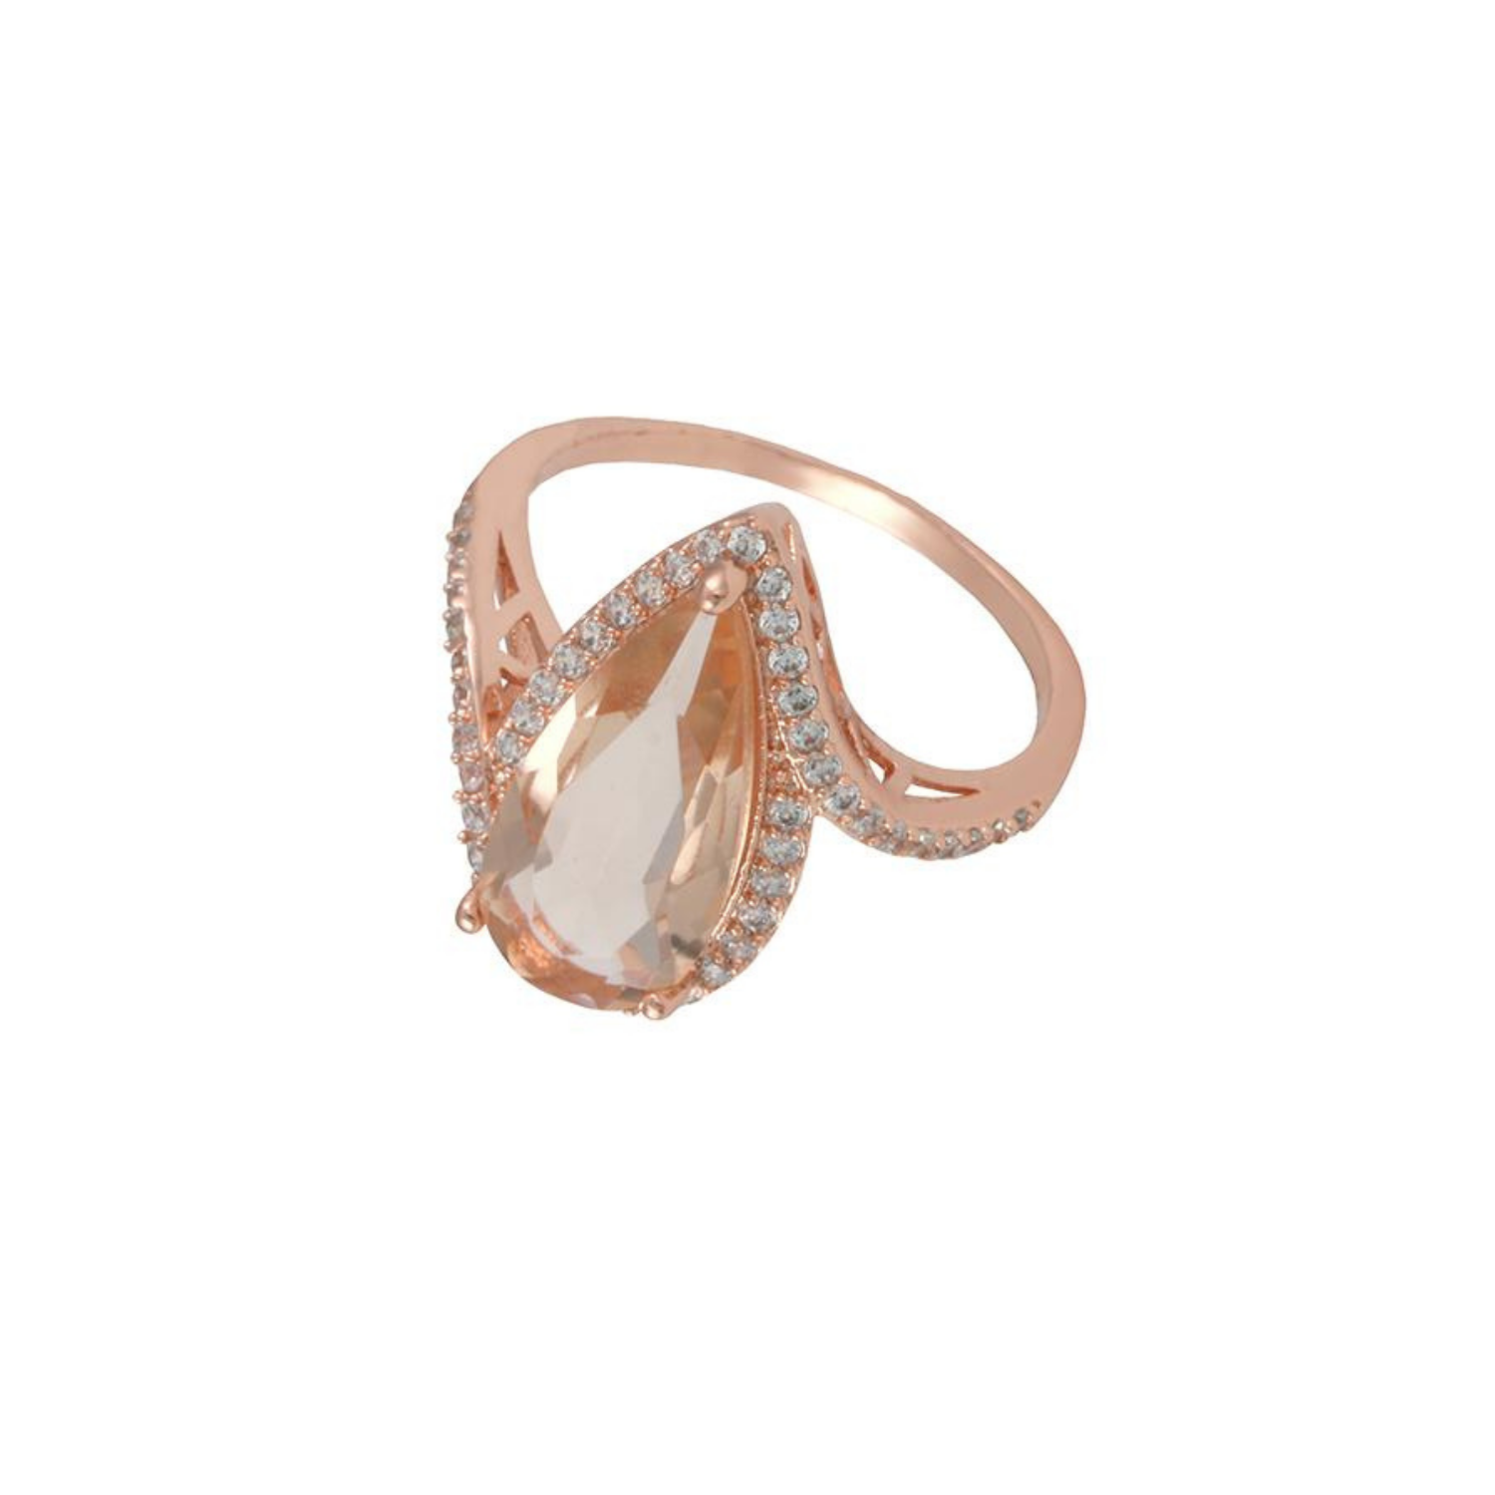 Sasha 5.5 Ct. Pear Cut CZ Peach Ring, Rose Gold - Zahra Jewelry